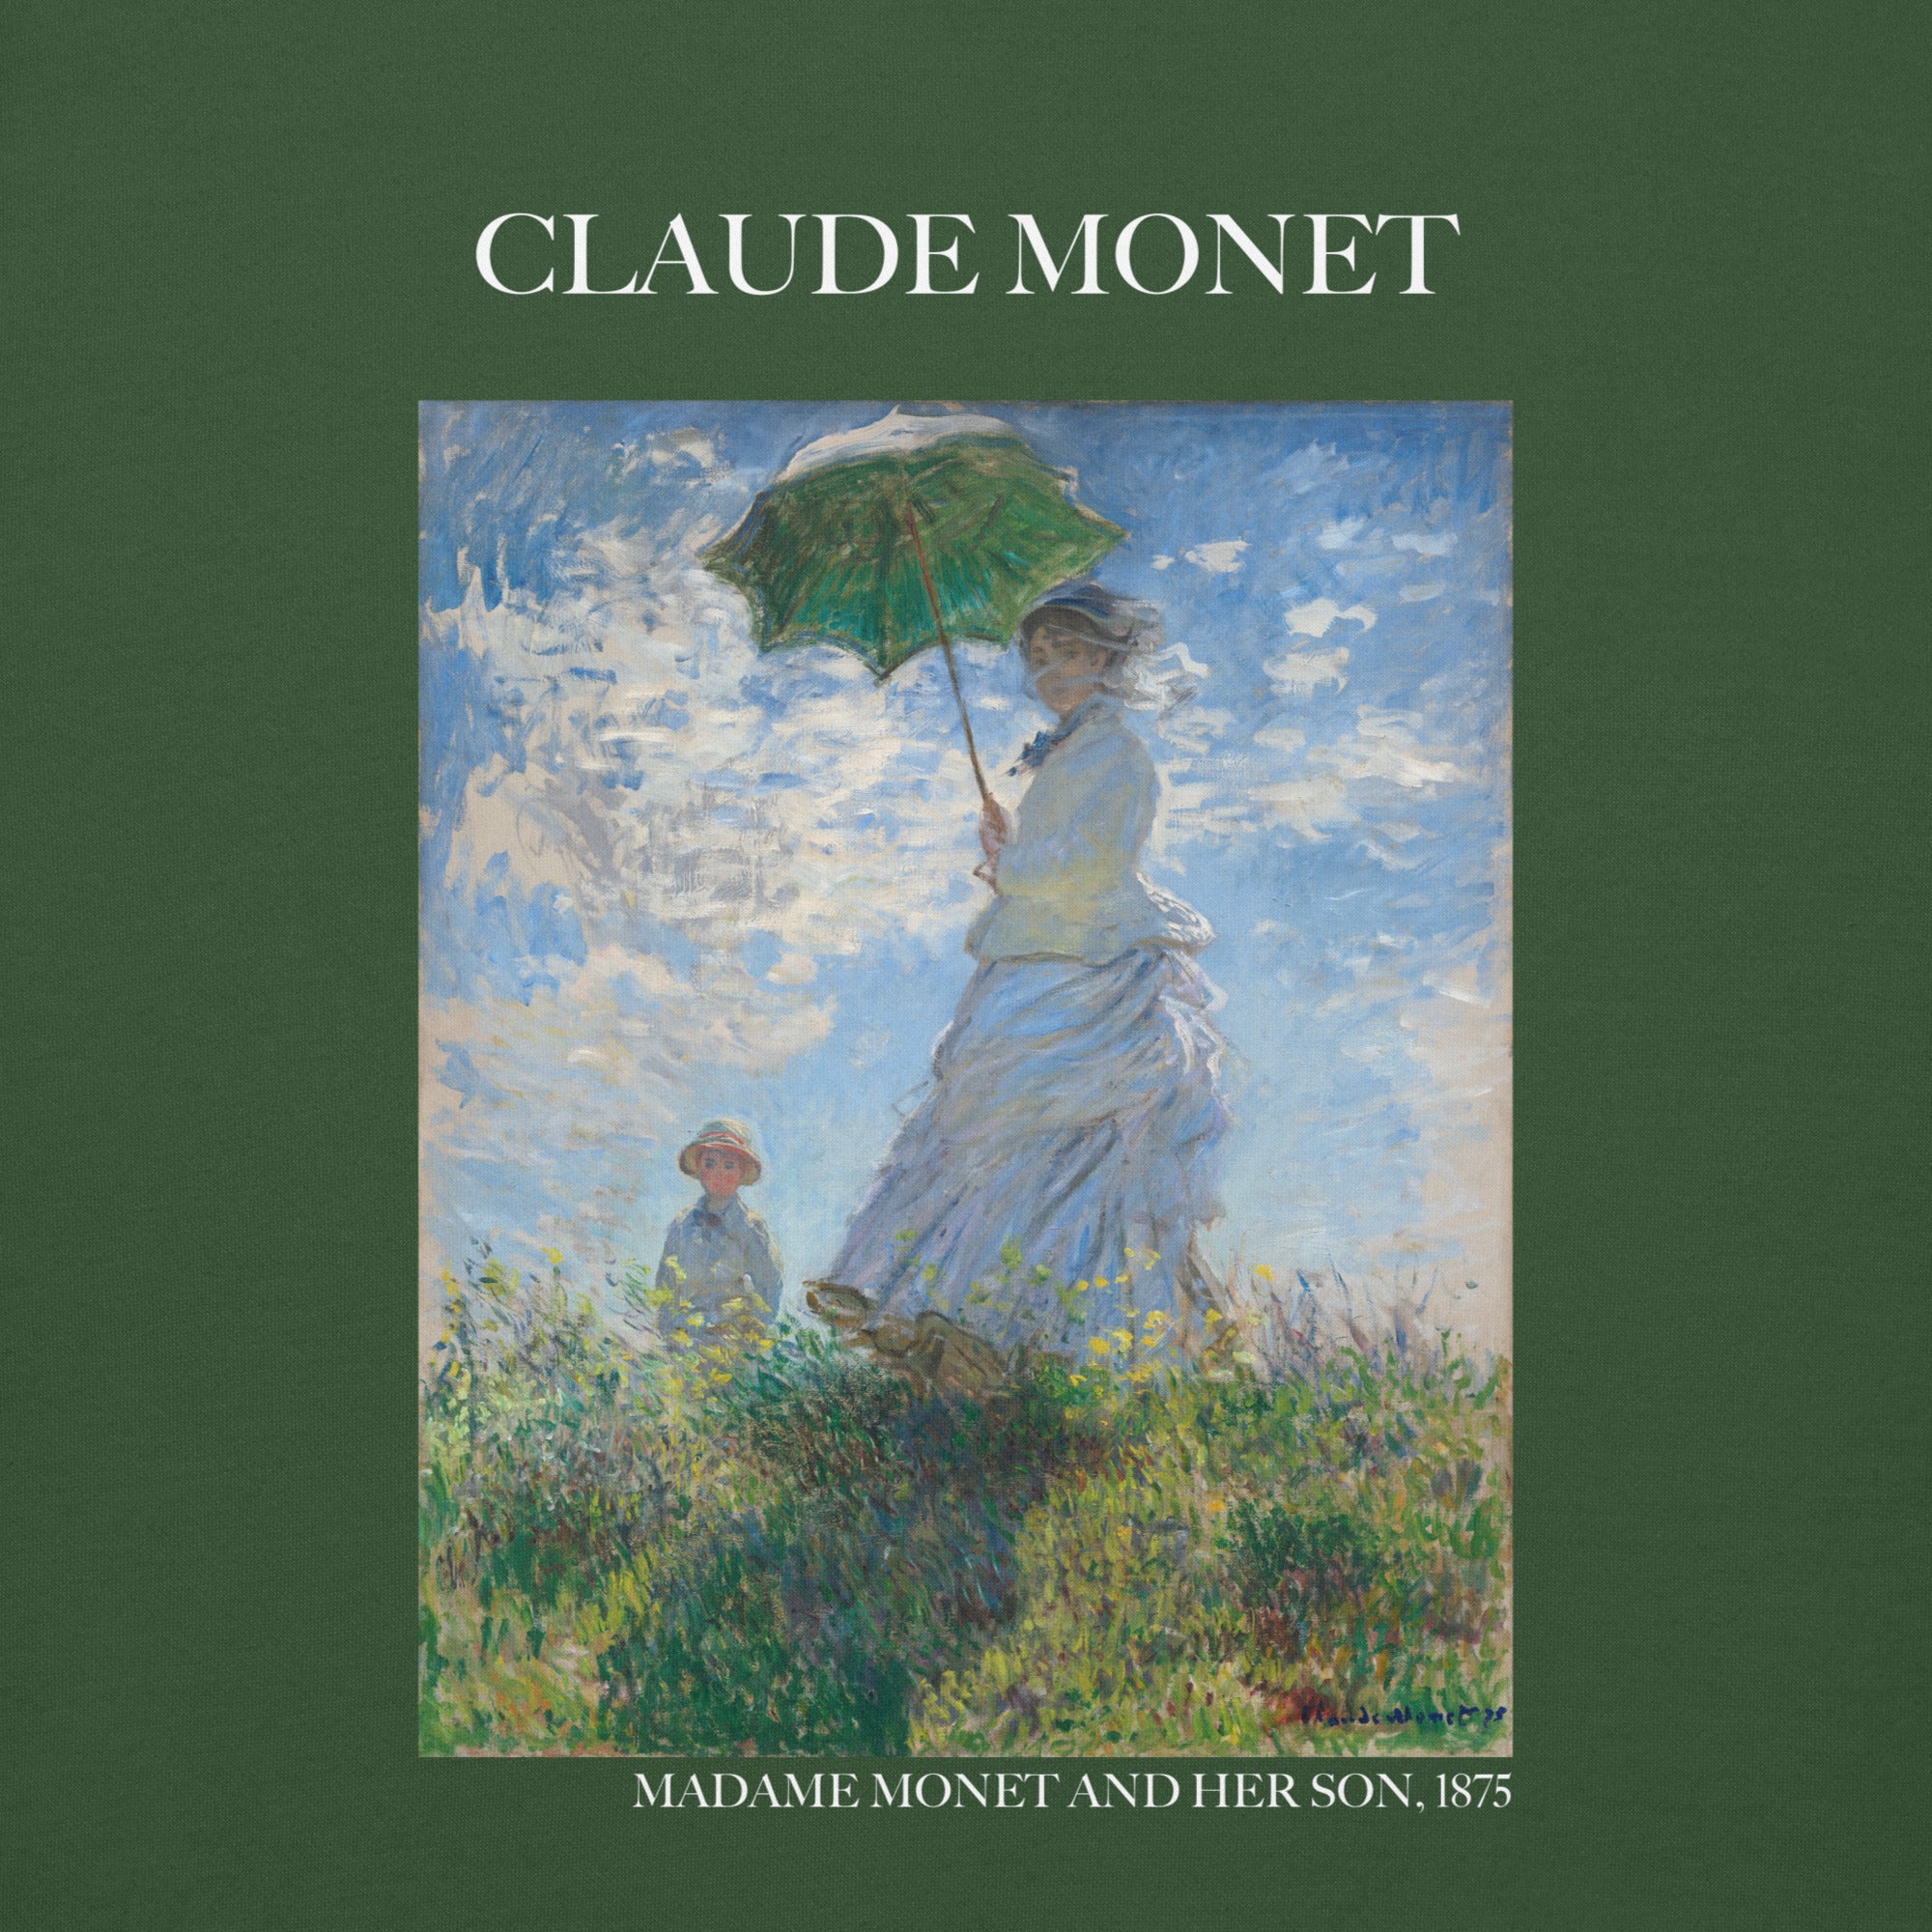 Claude Monet 'Madame Monet and Her Son' Famous Painting Sweatshirt | Unisex Premium Sweatshirt